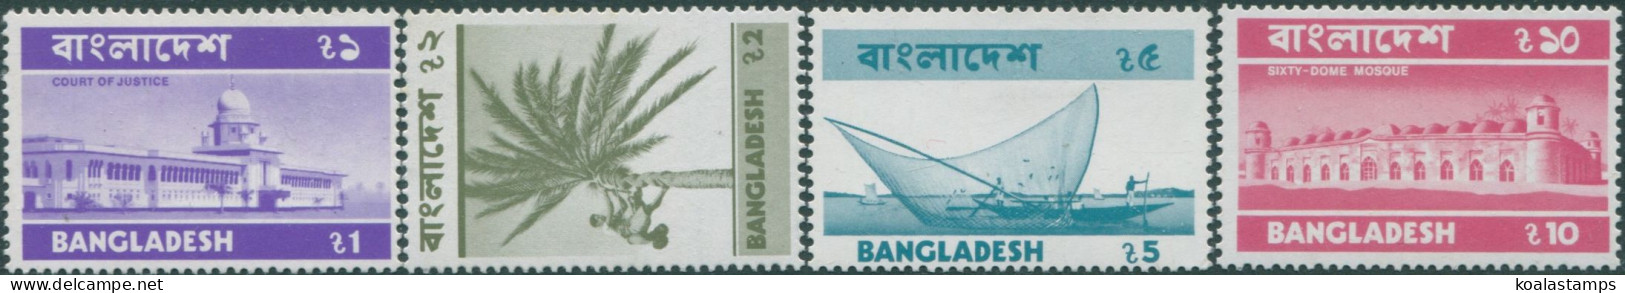 Bangladesh 1974 SG49-51a Scenes New Inscriptions Set MNH - Bangladesh